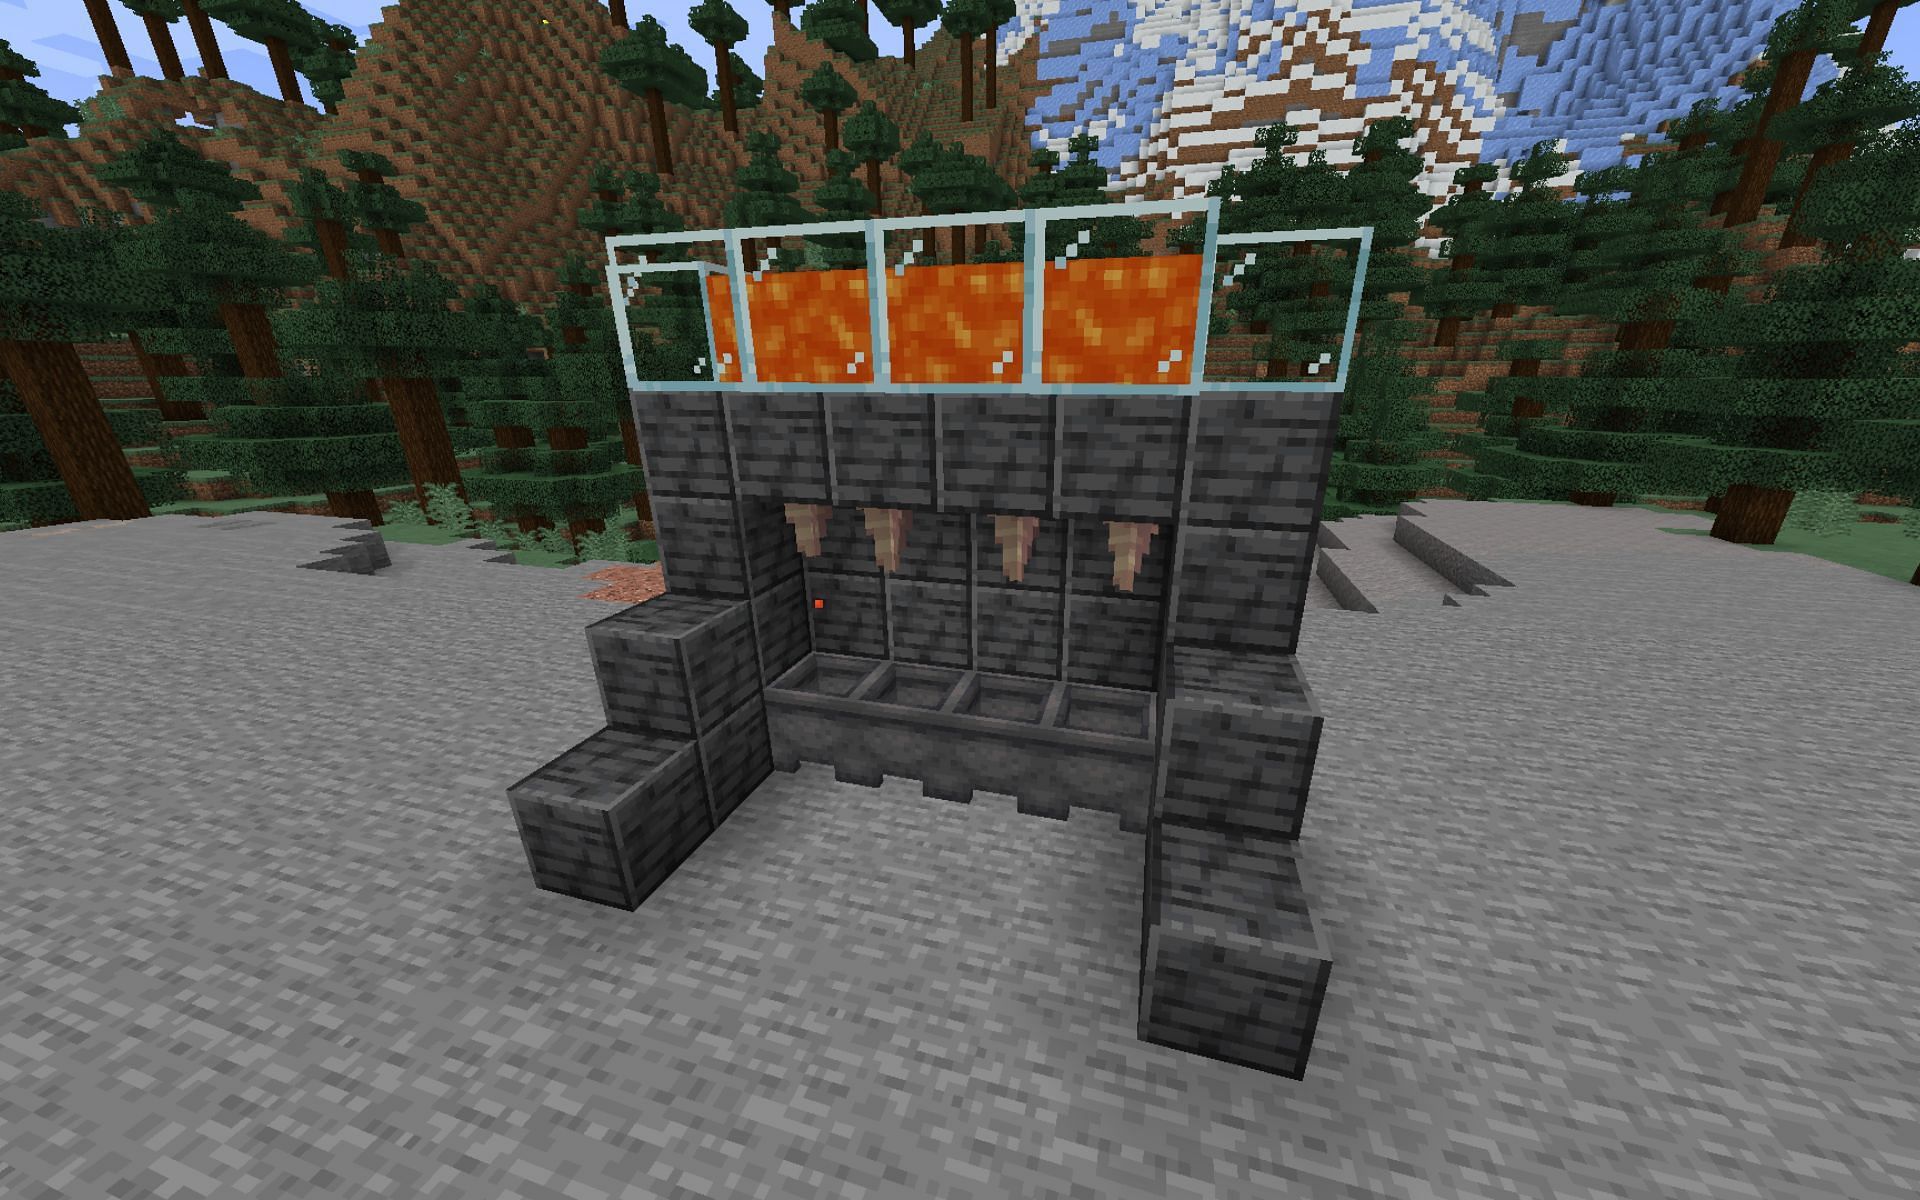 Automatic lava farm that will keep filling the cauldron in Minecraft 1.19 (Image via Mojang)